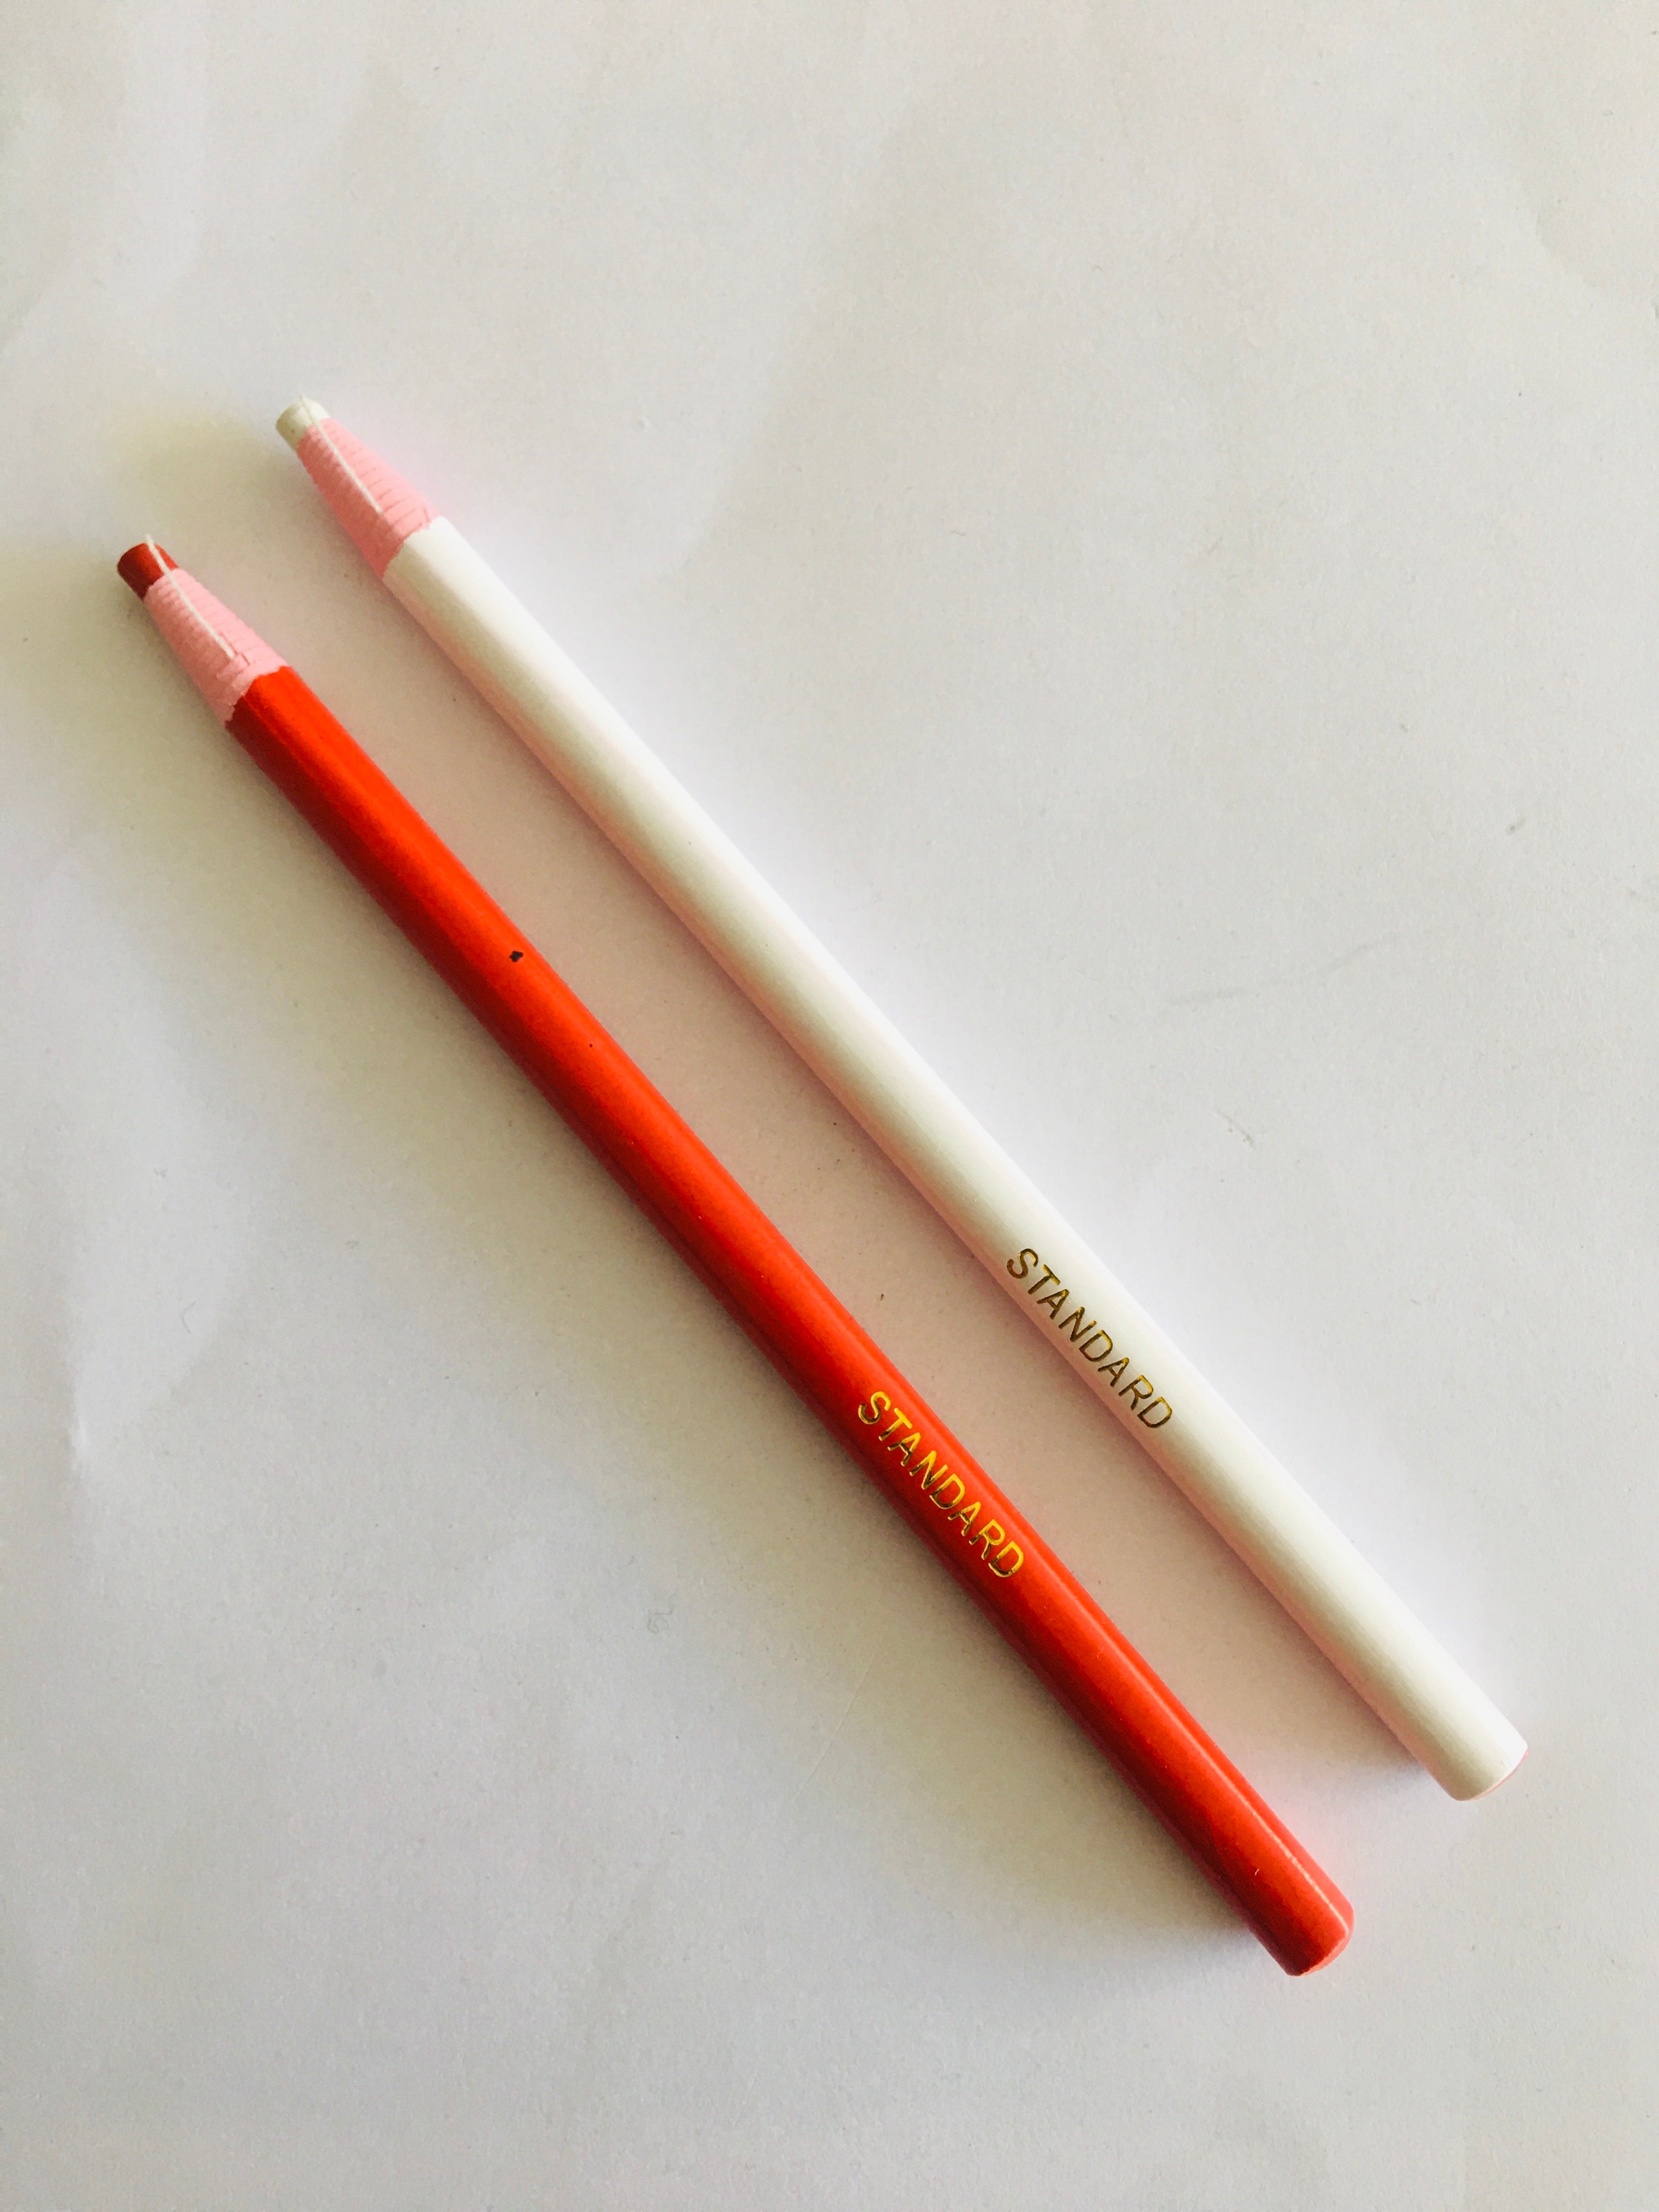 Chalk pencil